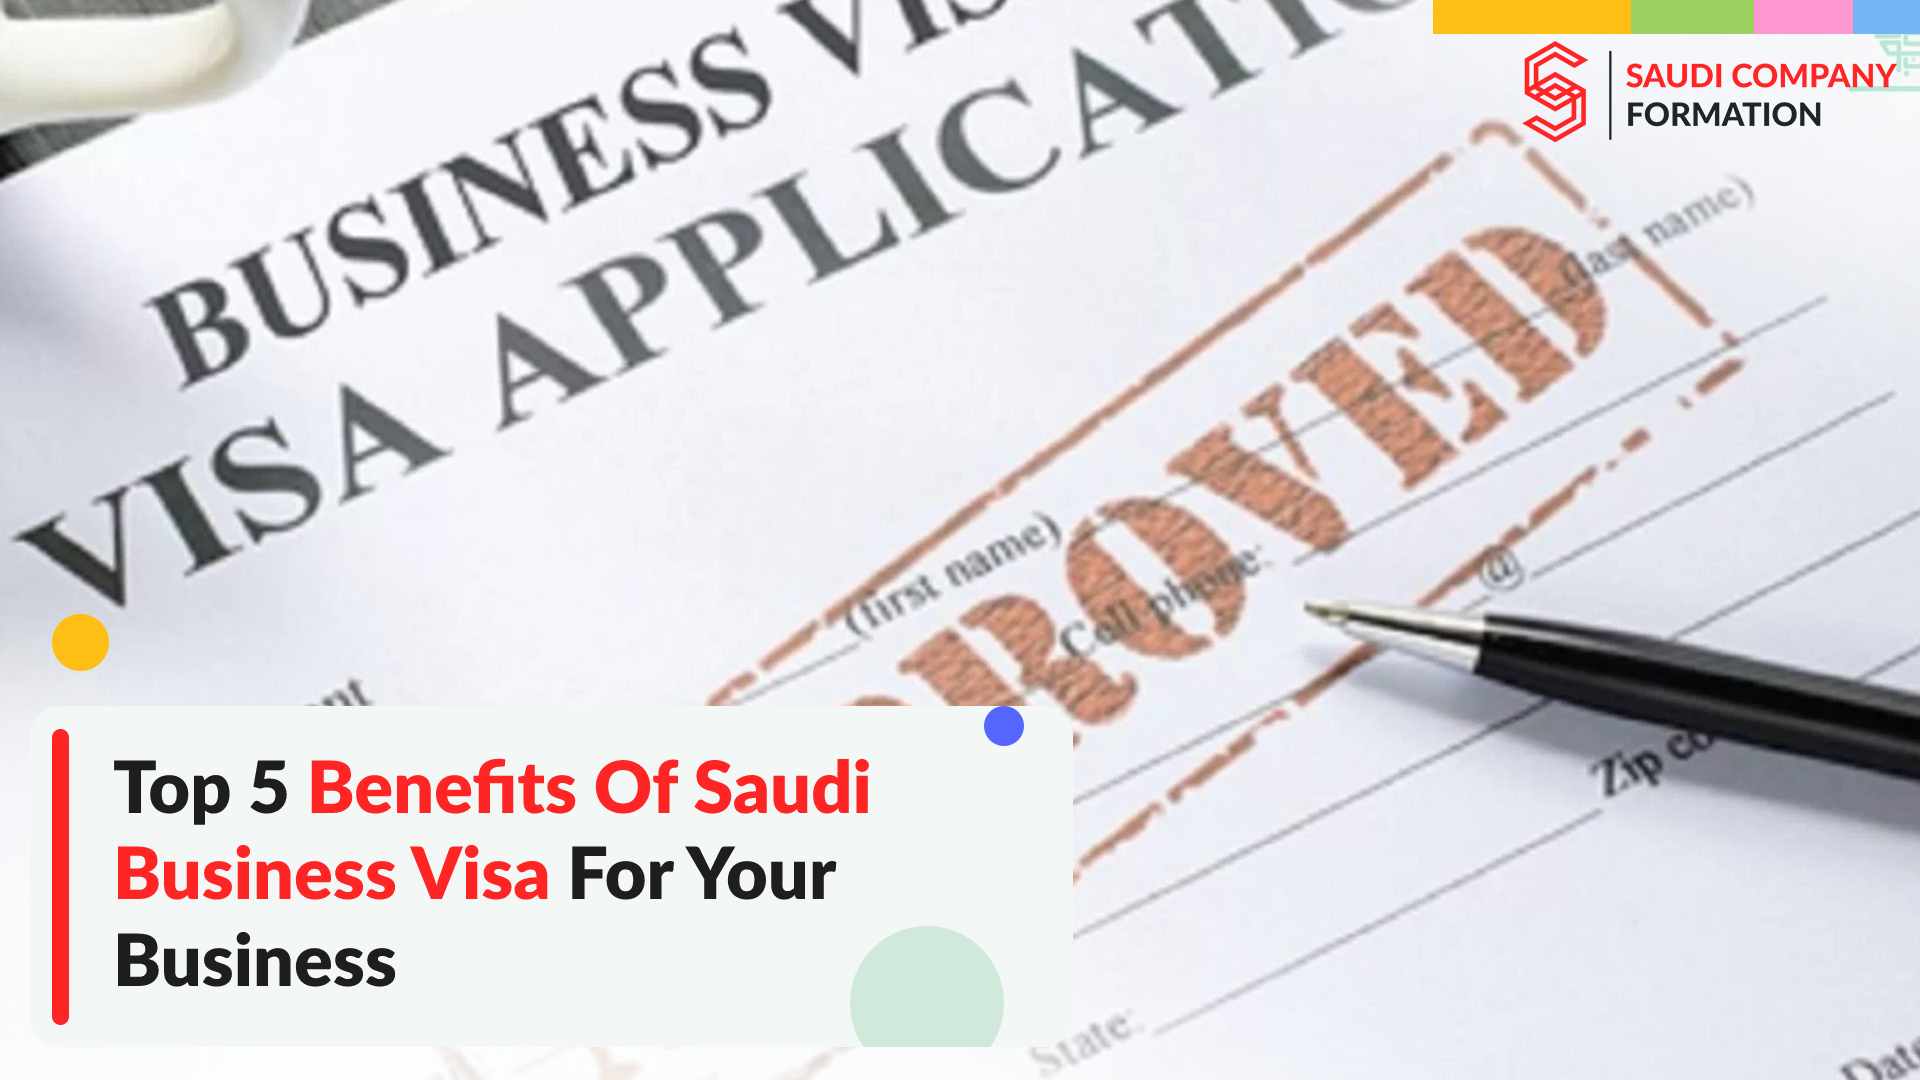 Benefits of Saudi Business Visa for your business